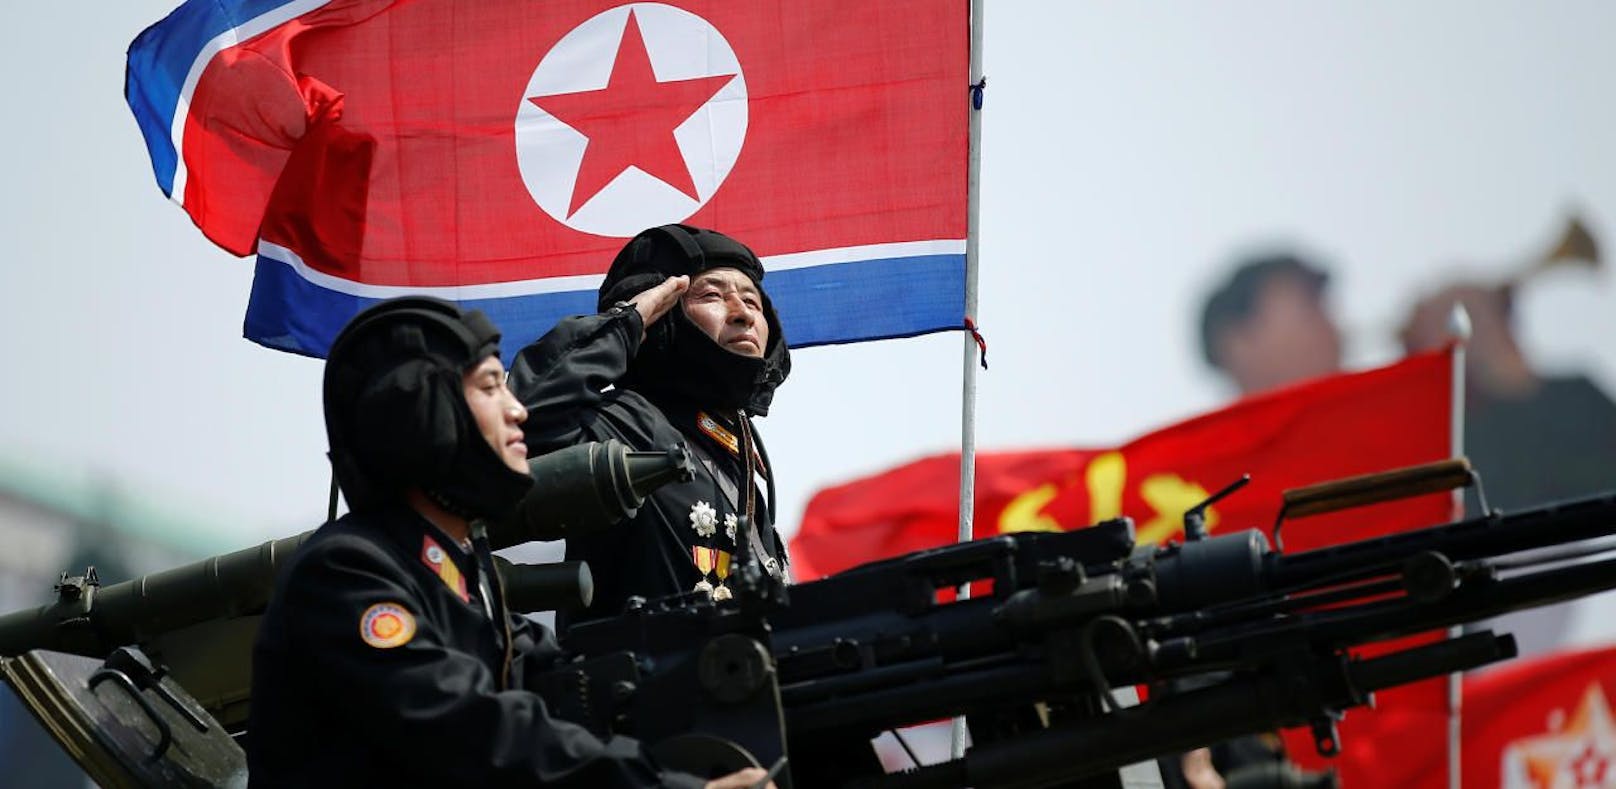 Nordkorea droht: "Jede Woche Raketentests"